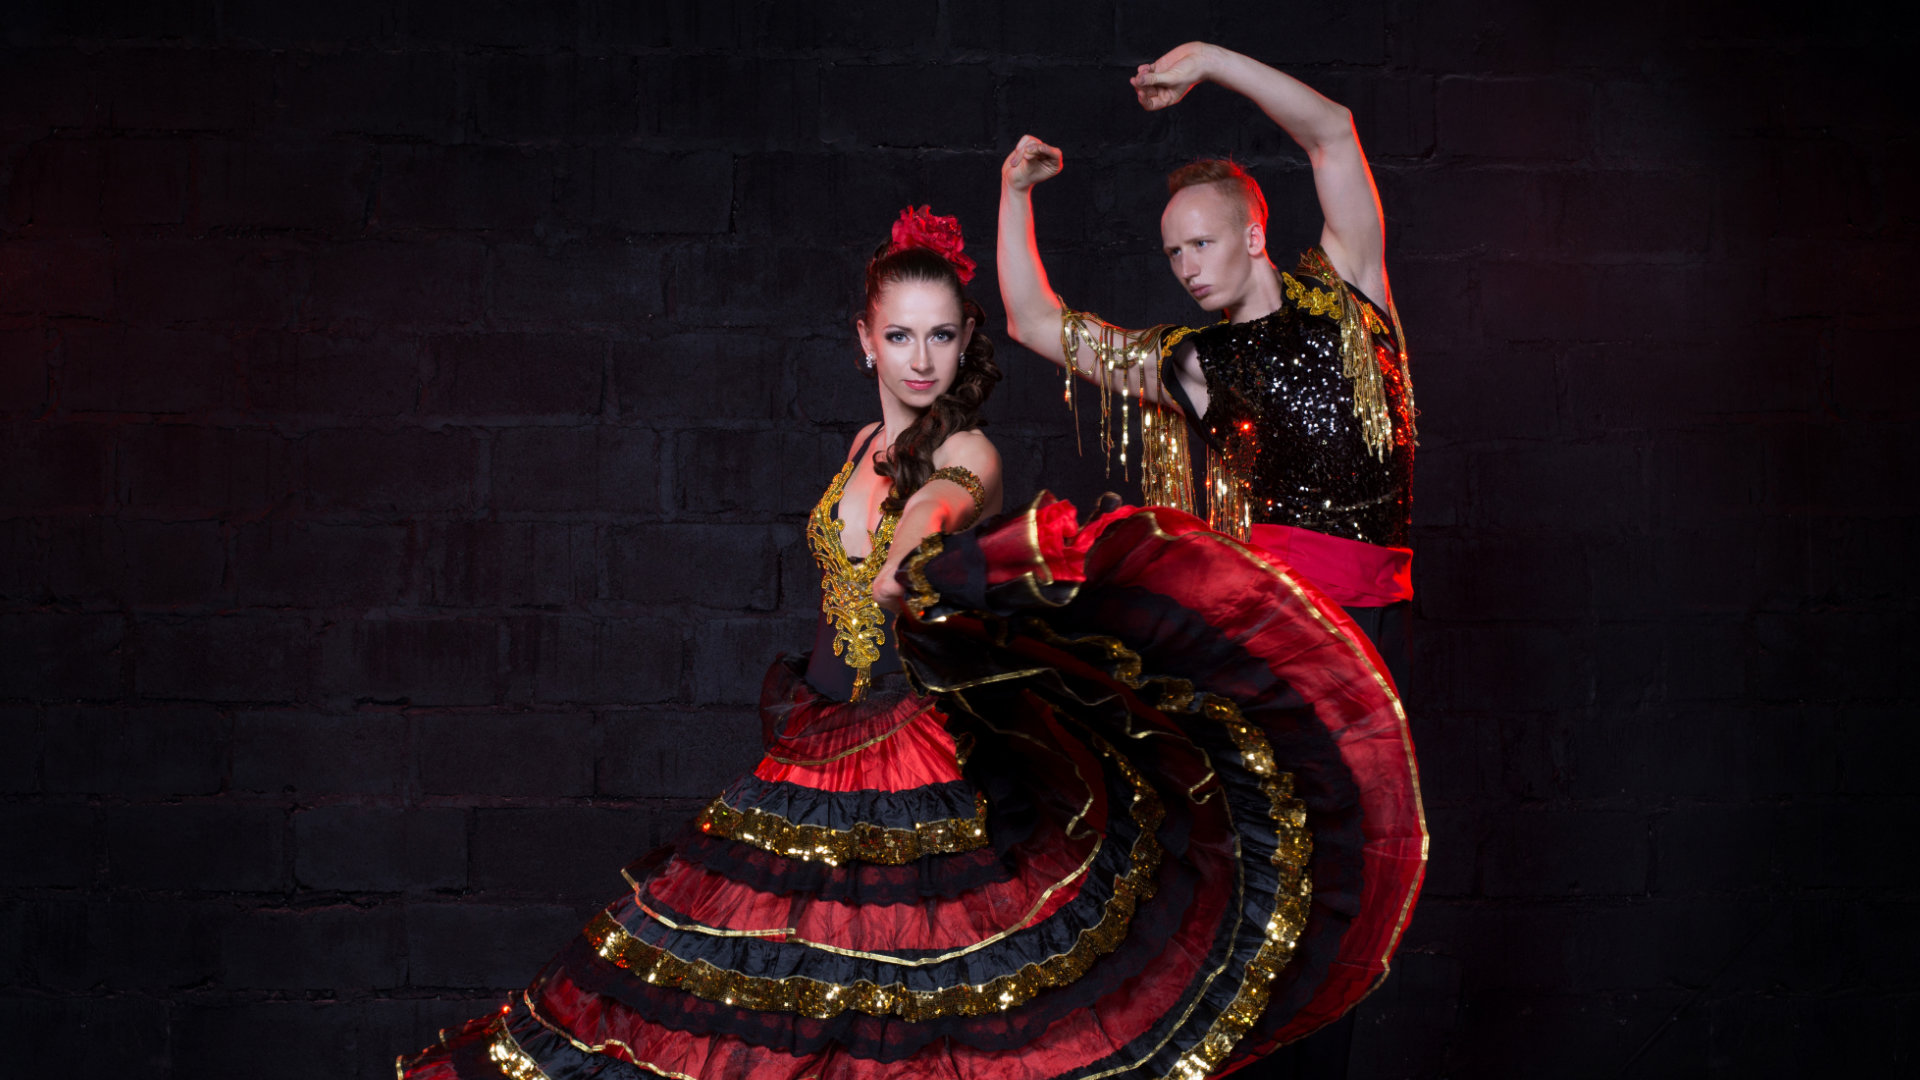 The Life, Love & Art of Flamenco